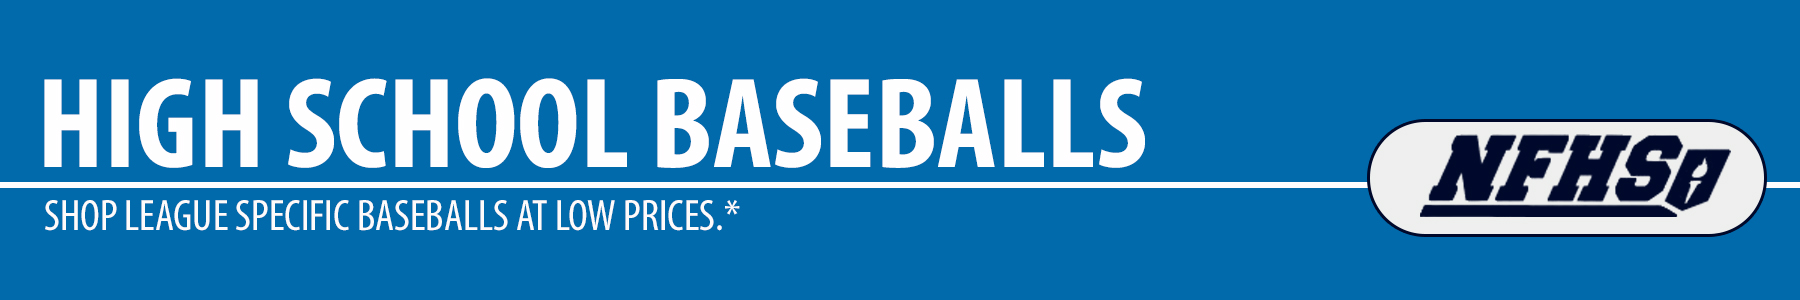 High School Baseballs - NFHS High School Baseballs - High School Practice Baseballs - High School Game Baseballs